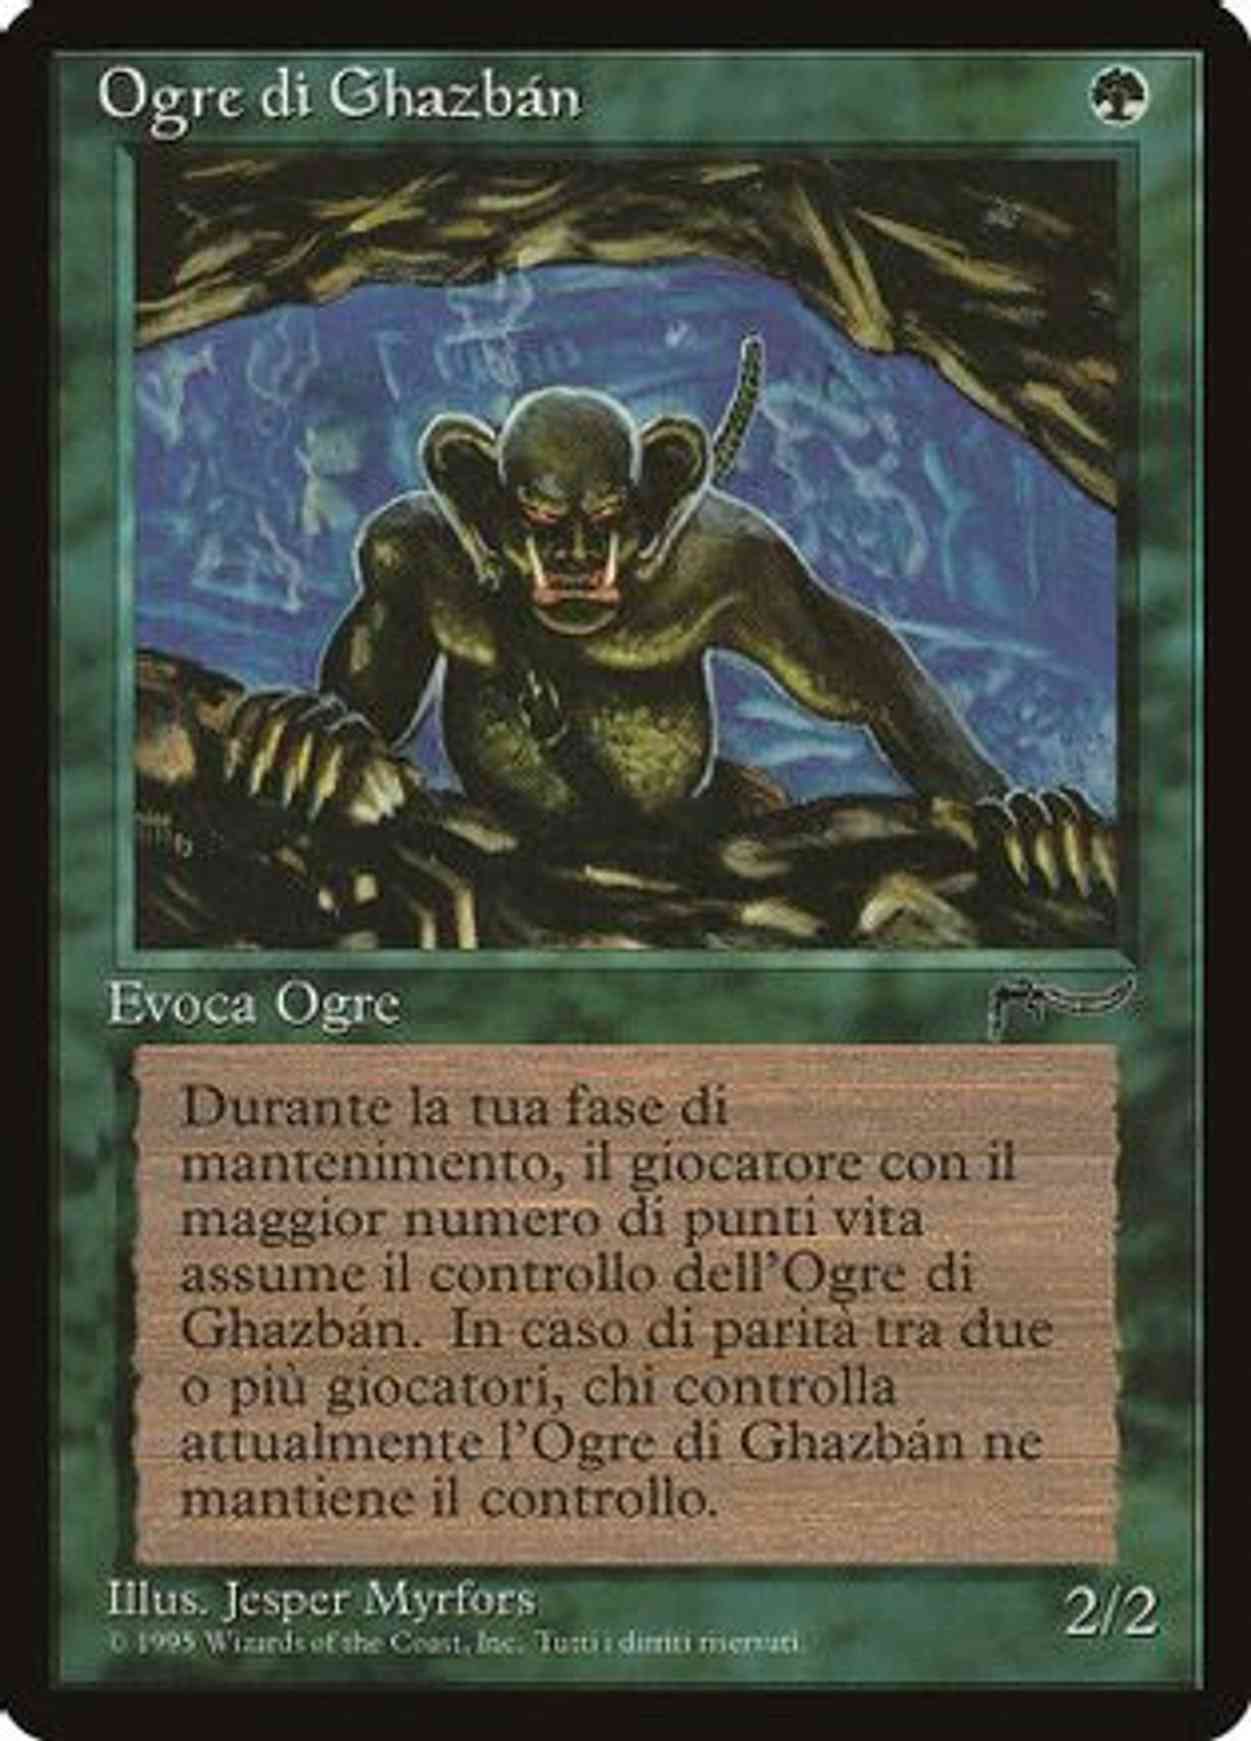 Ghazban Ogre (Italian) "Ogre di Ghazban" magic card front